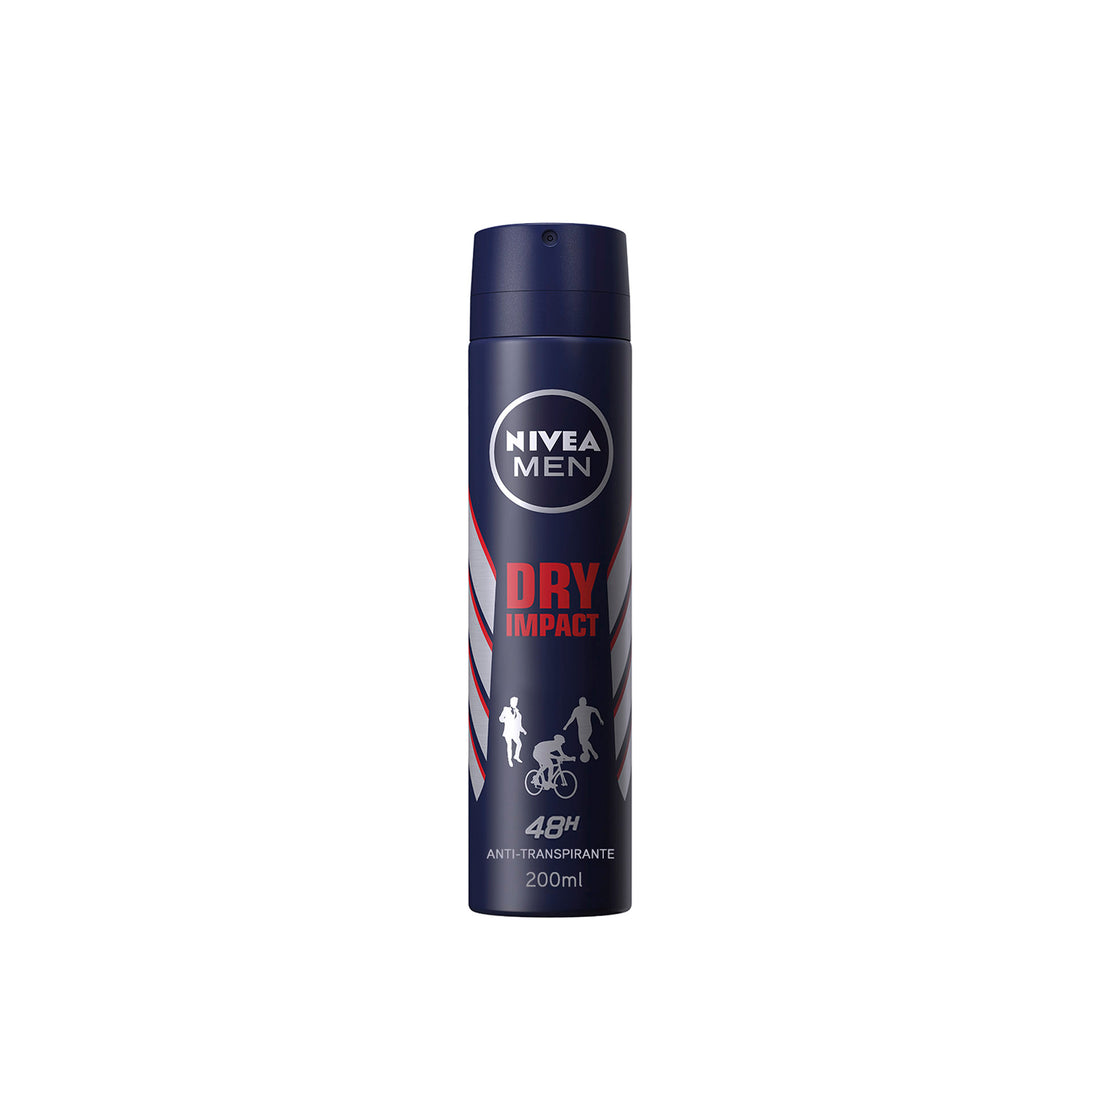 Nivea Men Spray déodorant à impact sec 200 ml